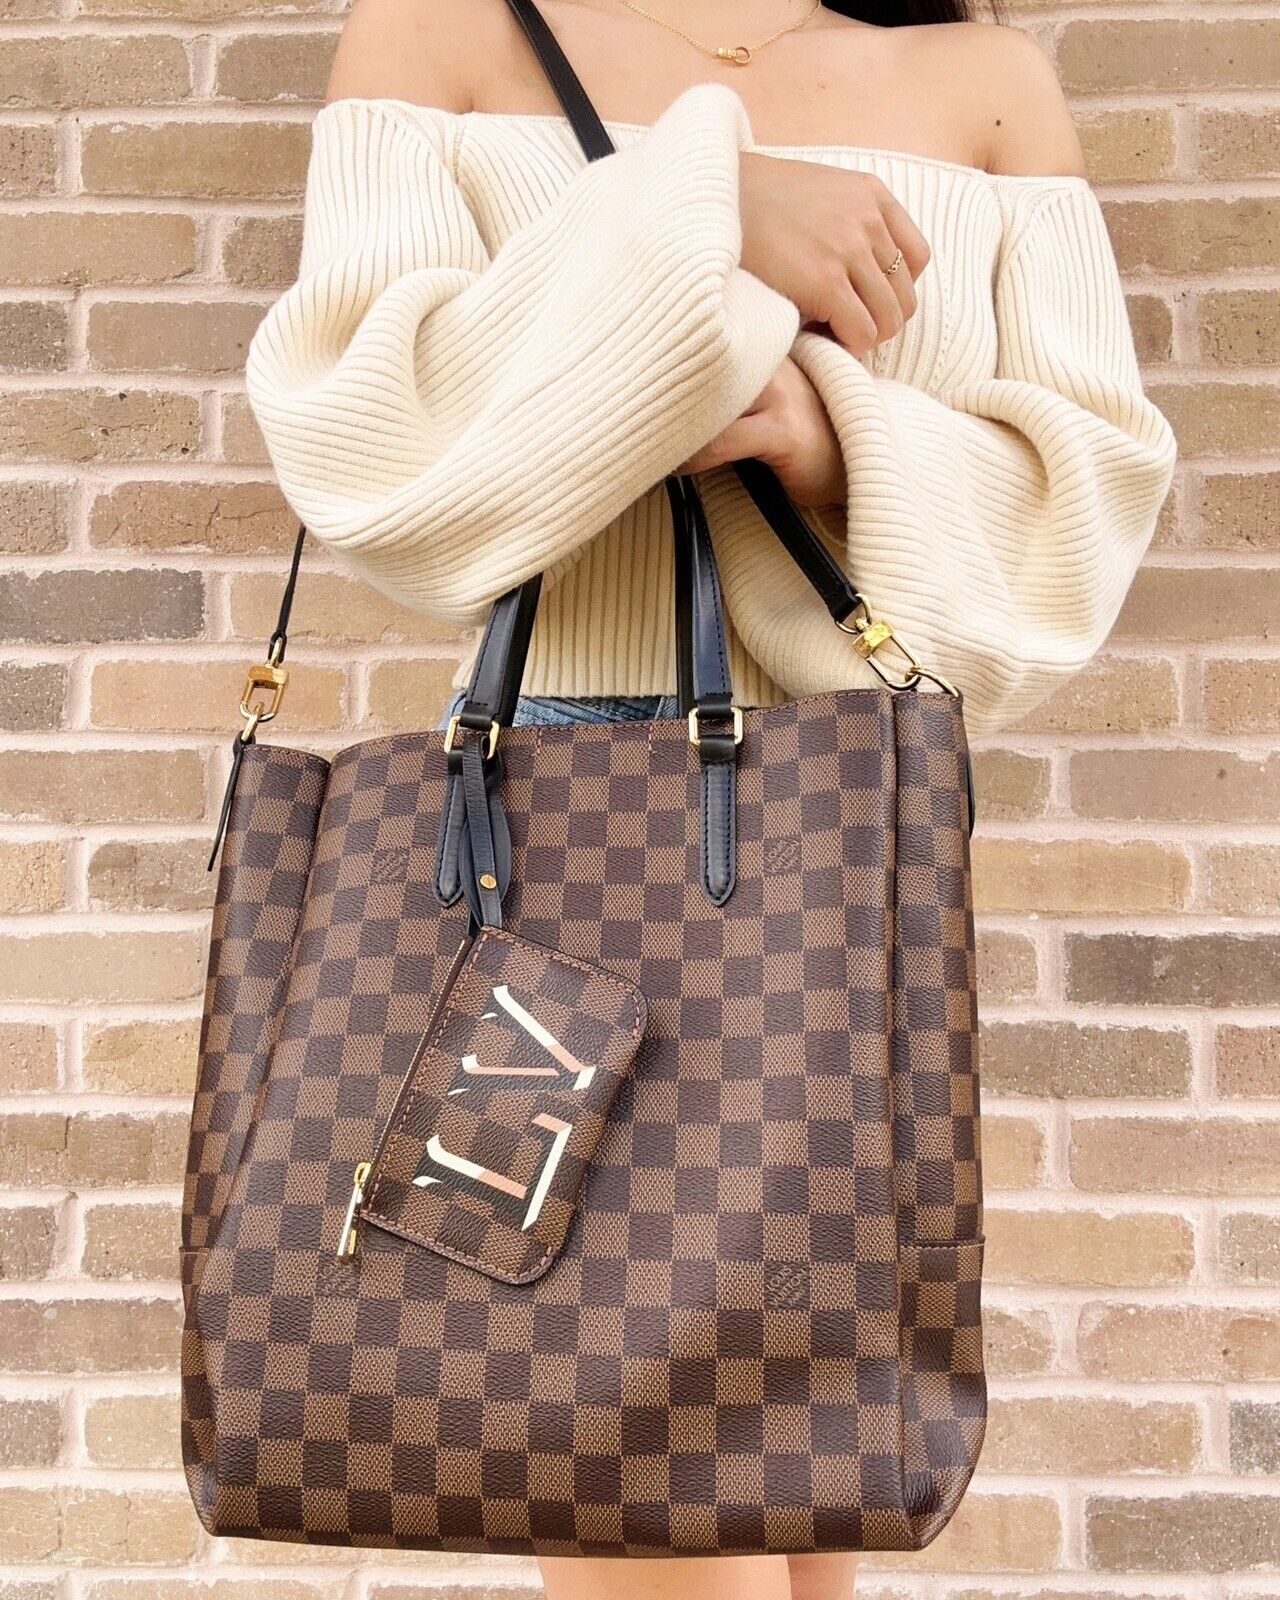 Chanel - Louis Vuitton, Sale n°2245, Lot n°362